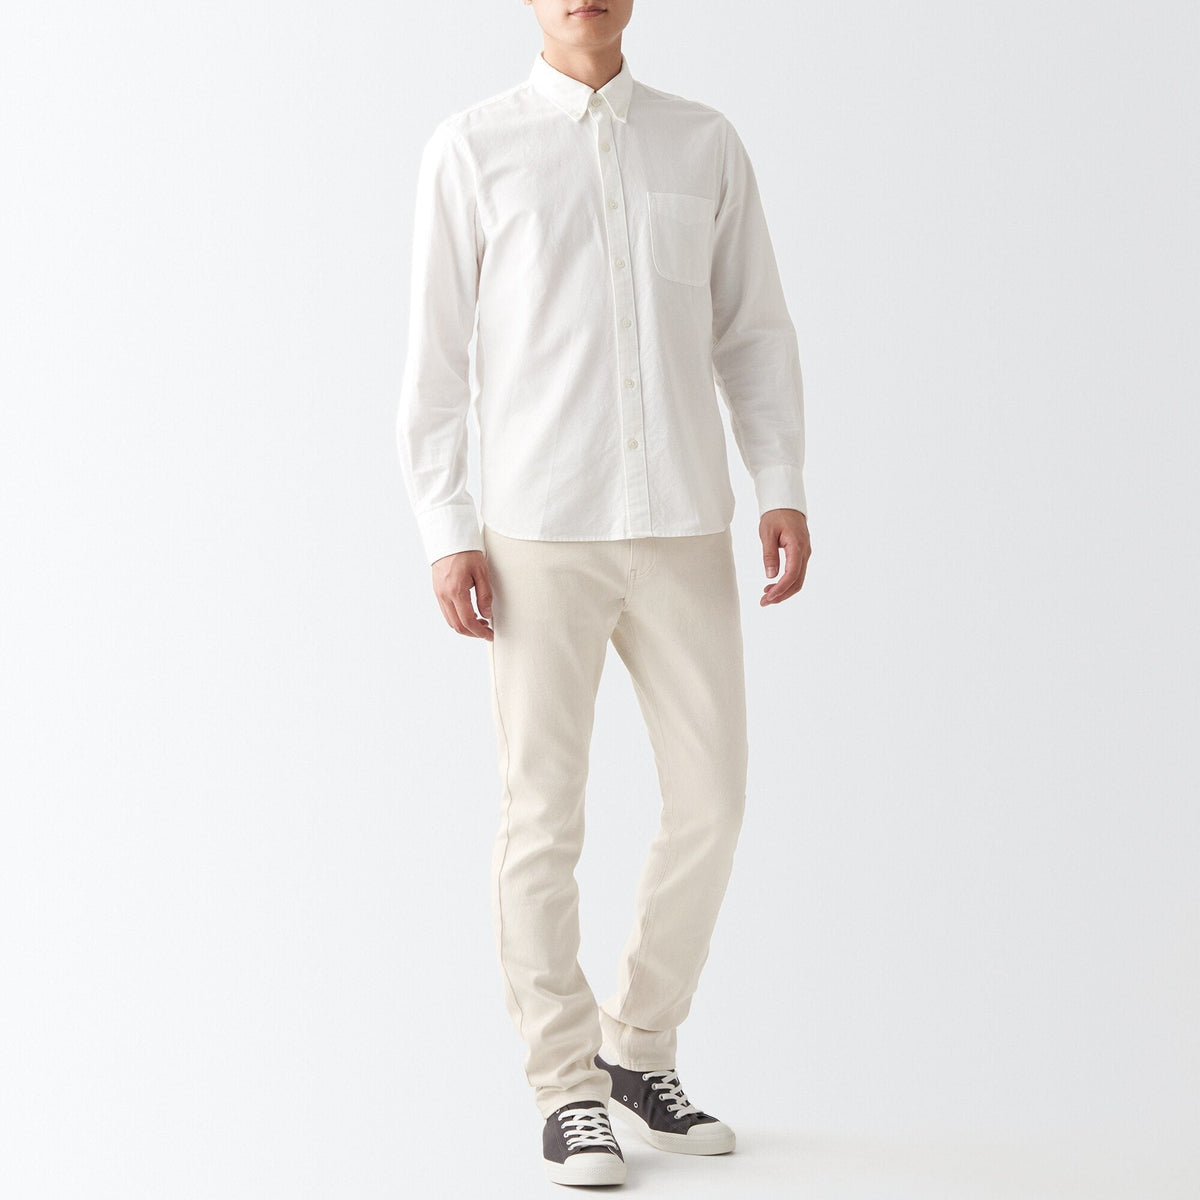 Buy Men White Dark Slim Fit Jeans Online - 750631